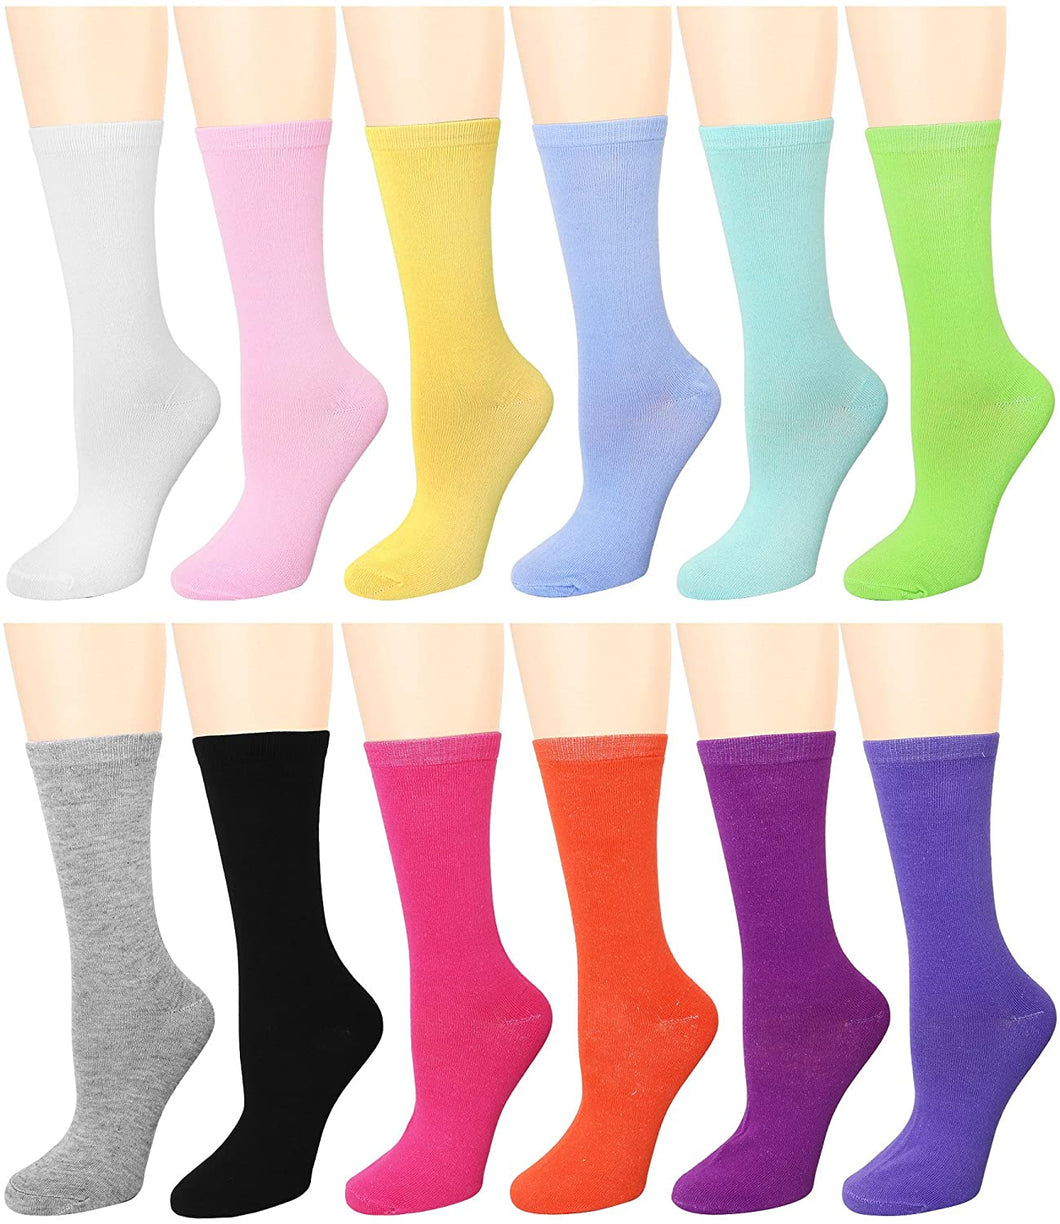 12-Pack Women's Crew Socks - Solid Assorted